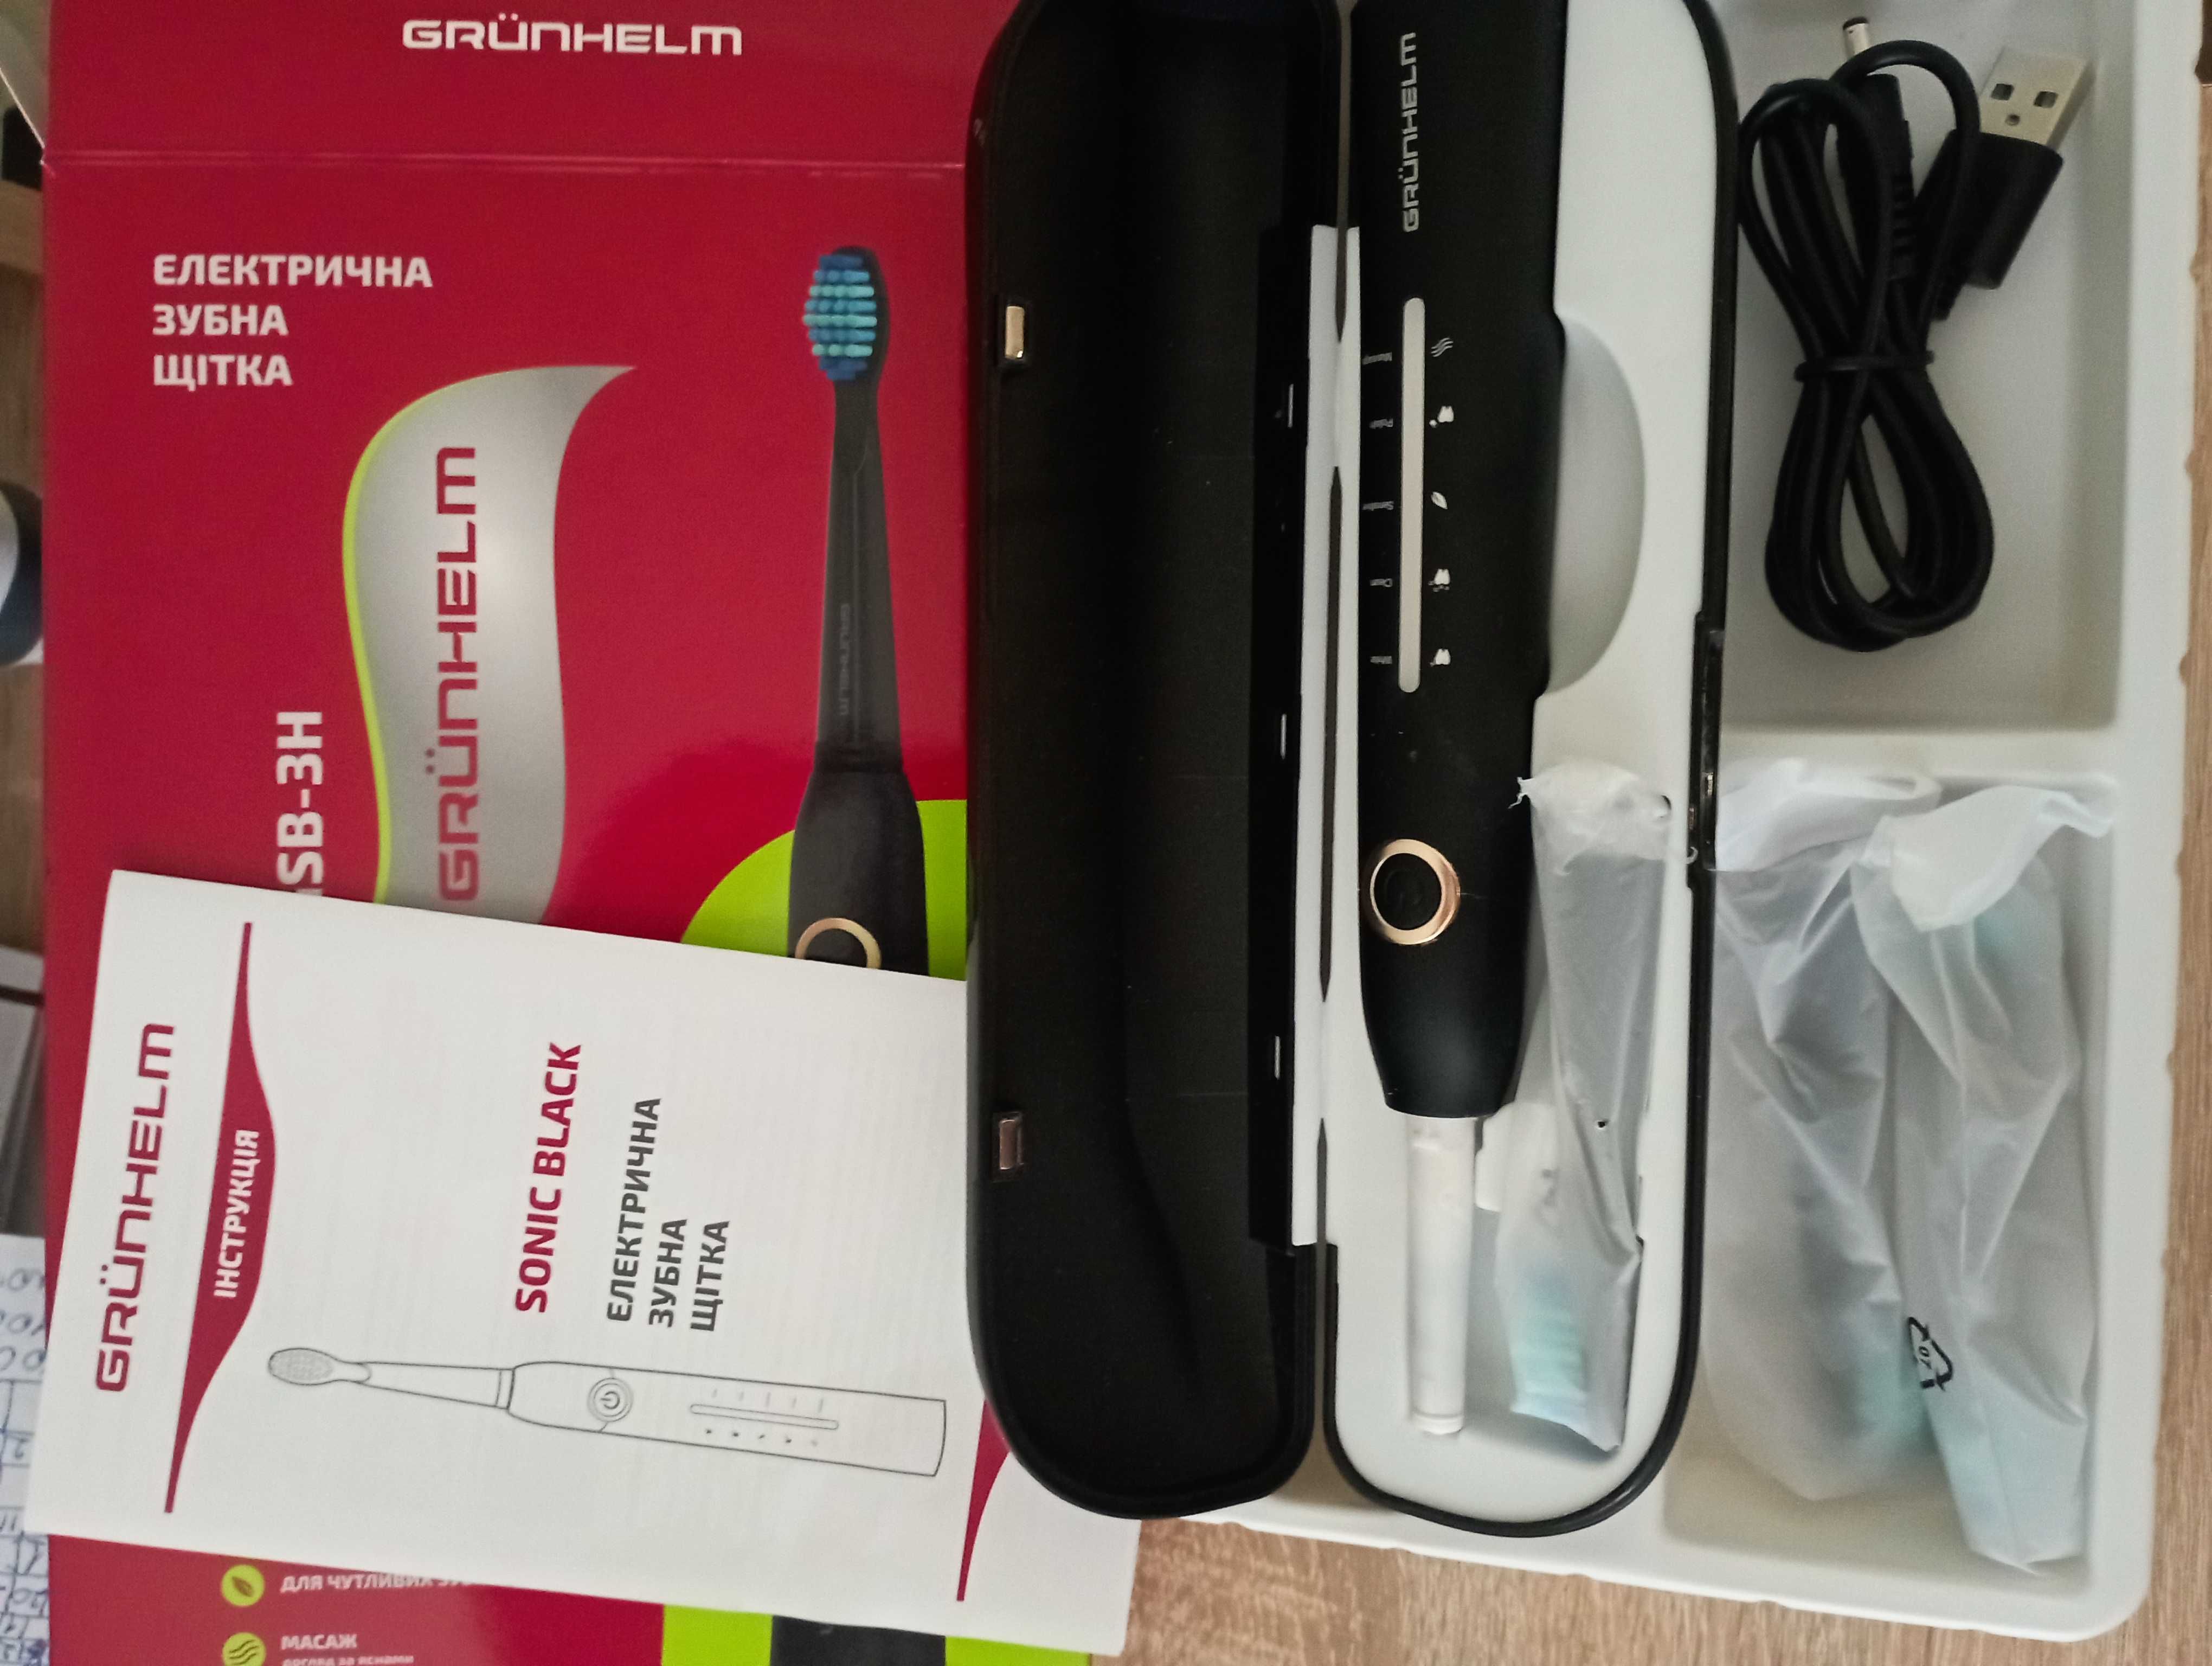 Електрична зубна щітка Grunhelm GSPB-3H